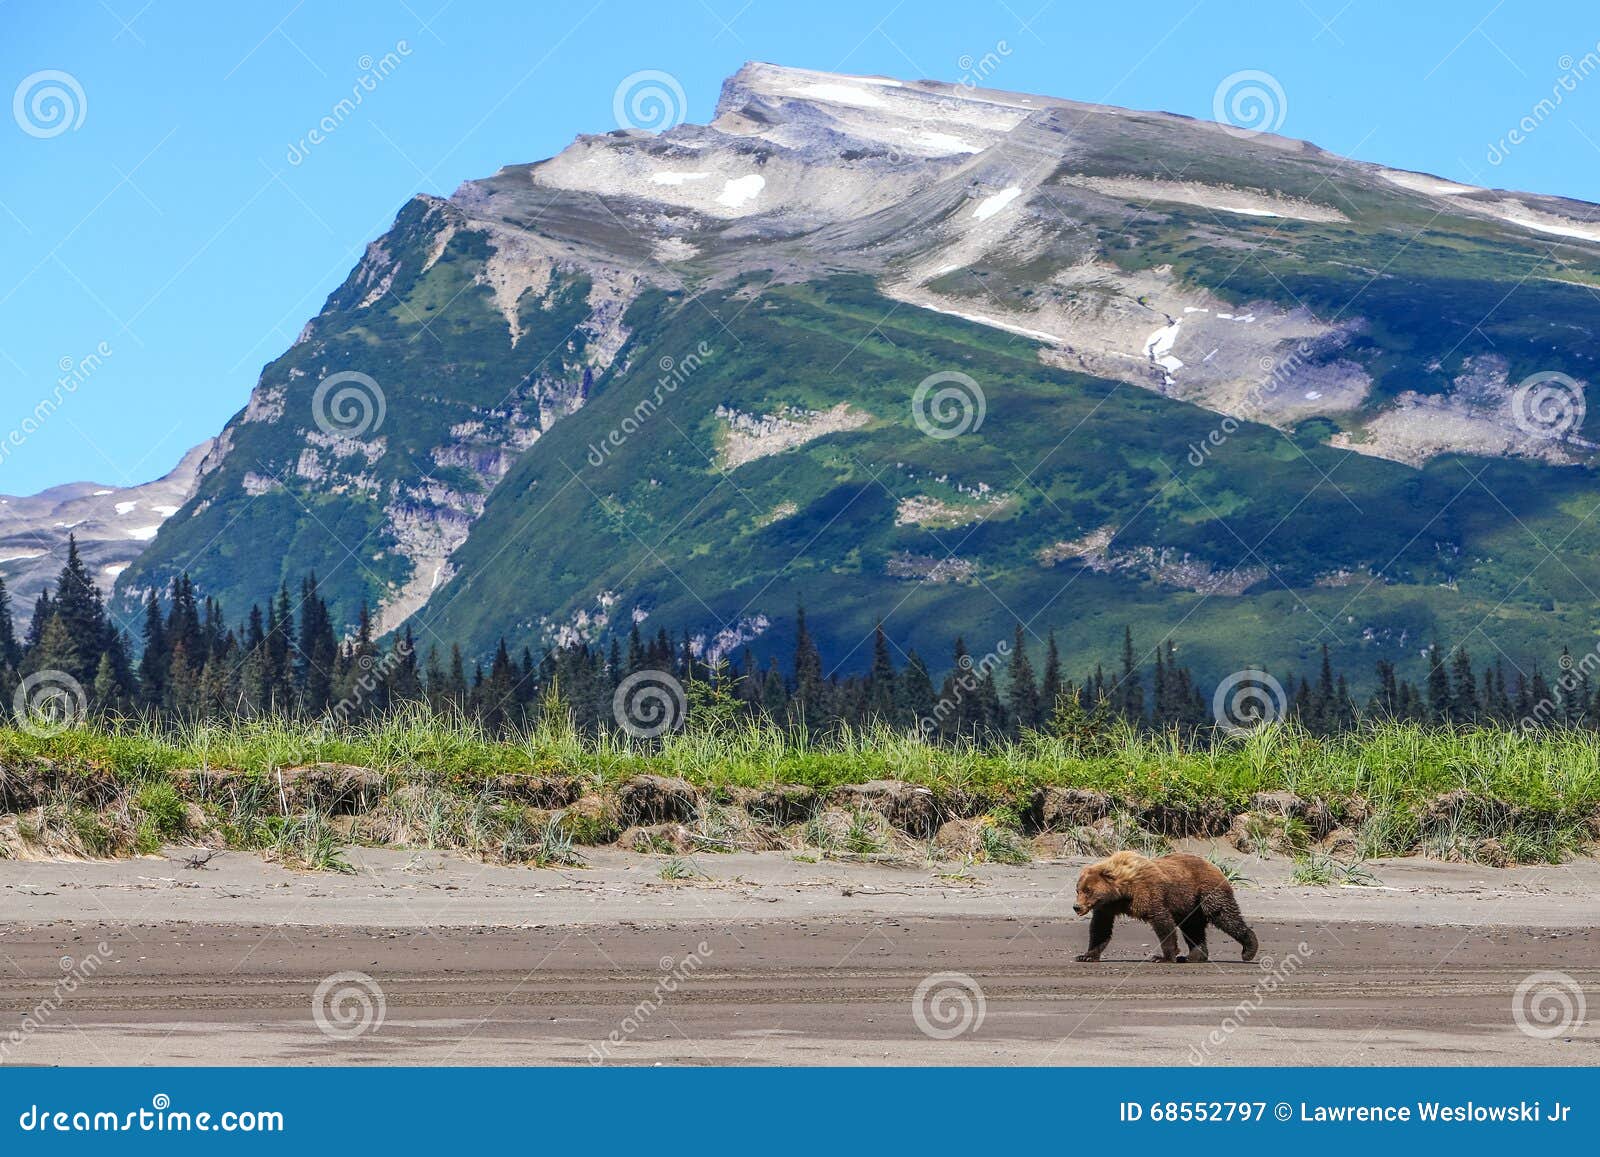 slope mountain lake clark alaska brown bear